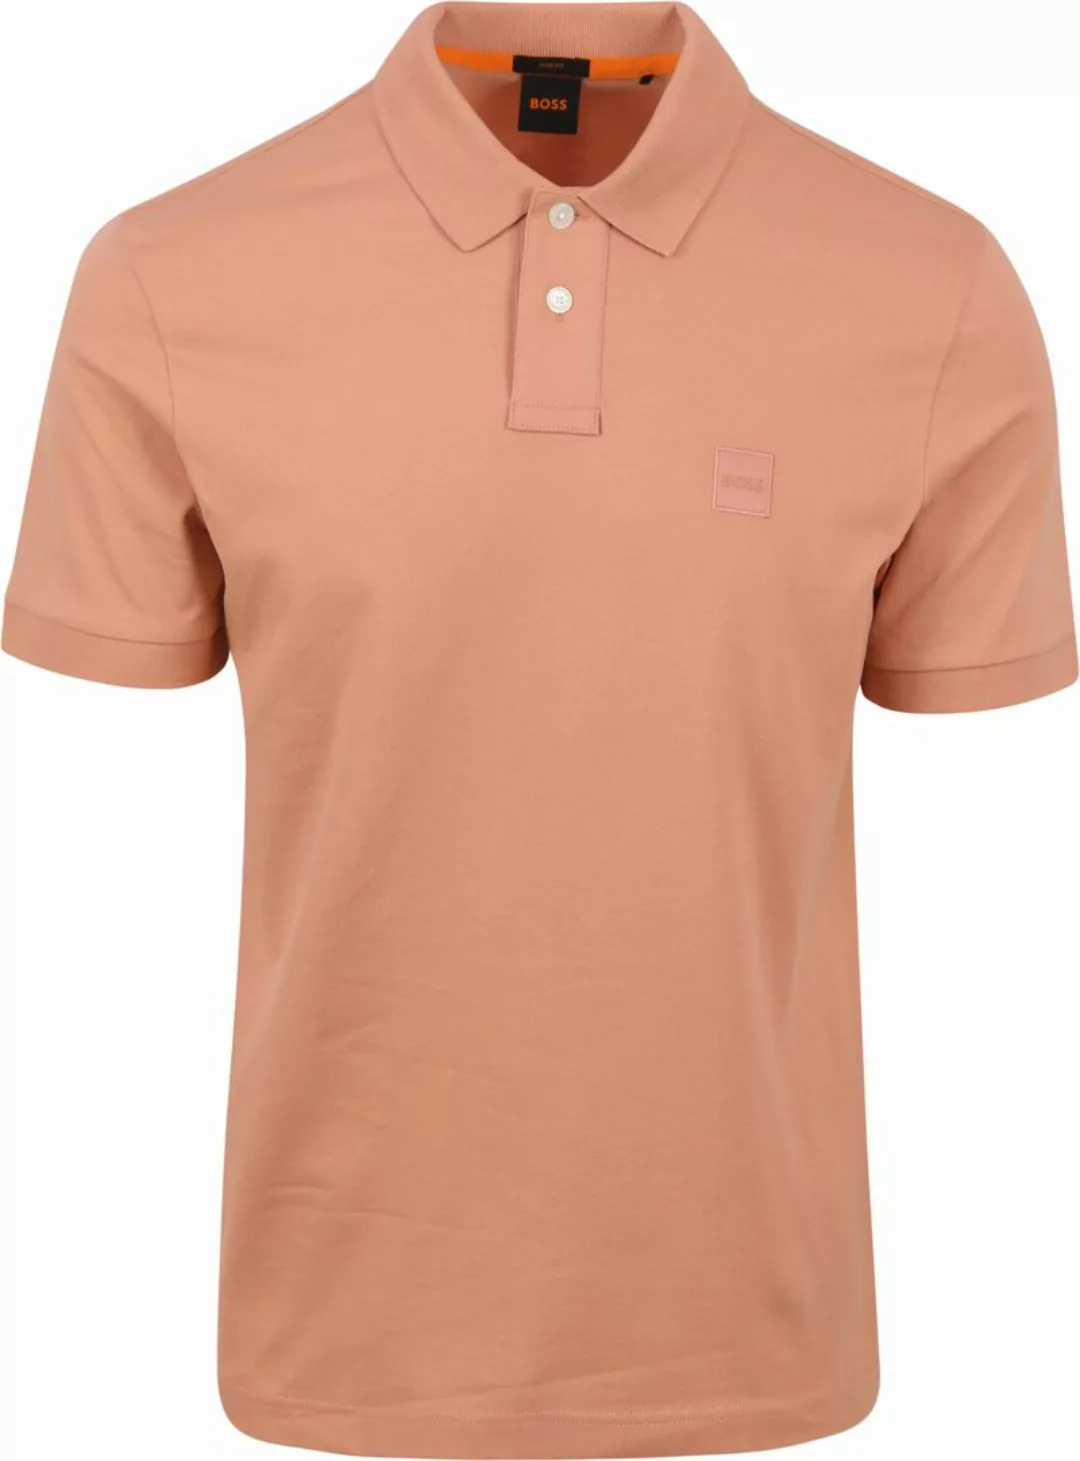 BOSS Polo Shirt Passenger Peach - Größe M günstig online kaufen